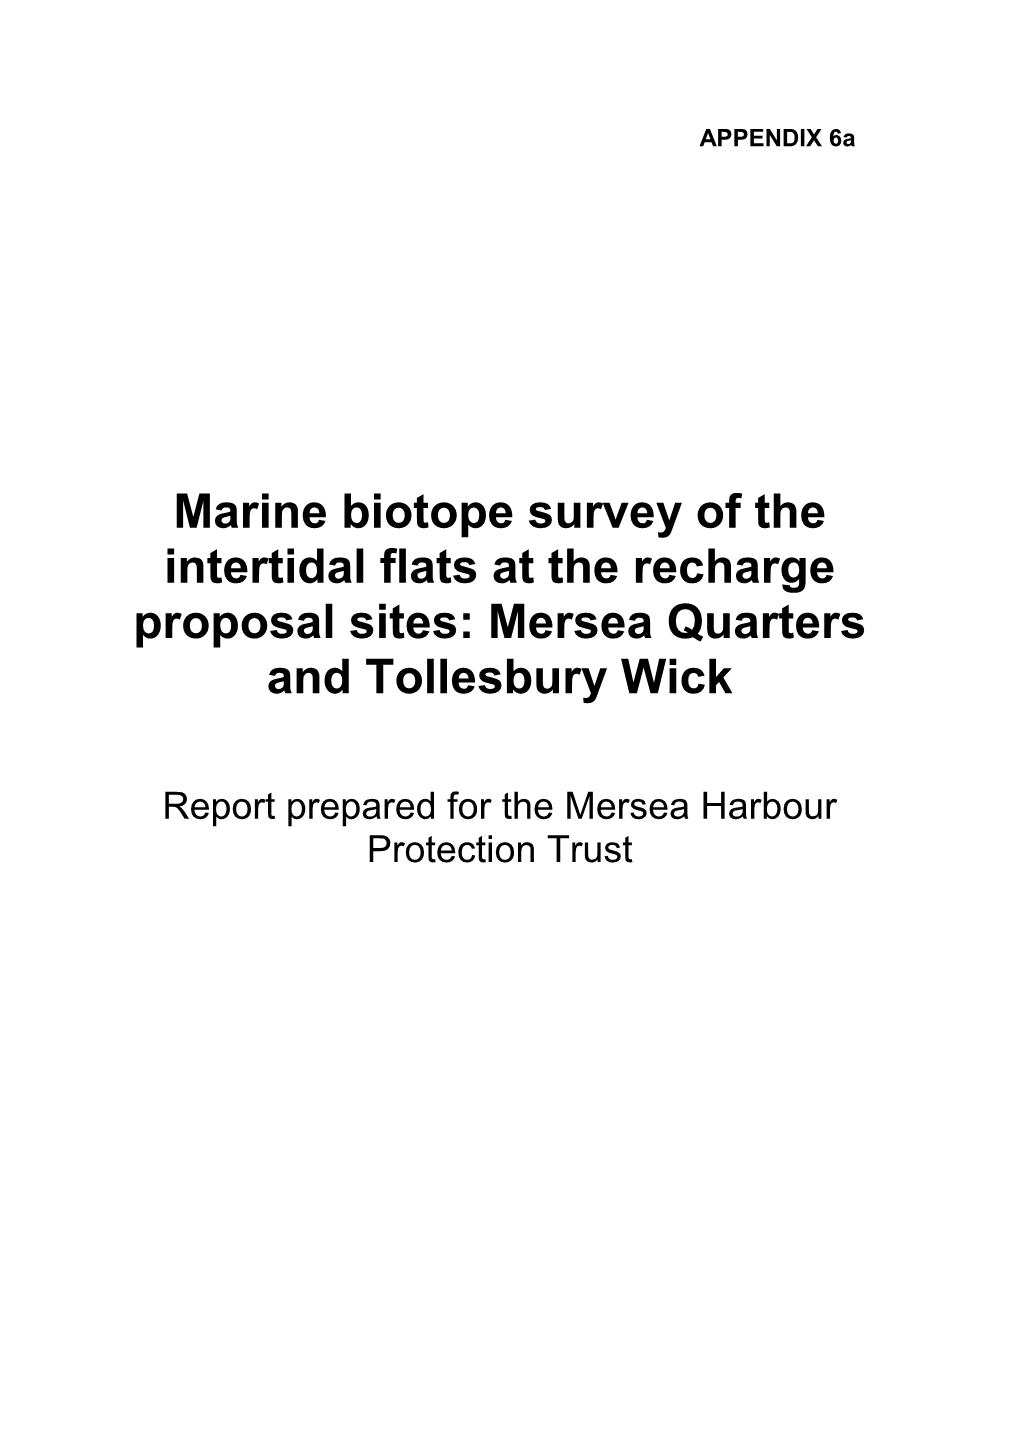 Marine Biotope Survey Report